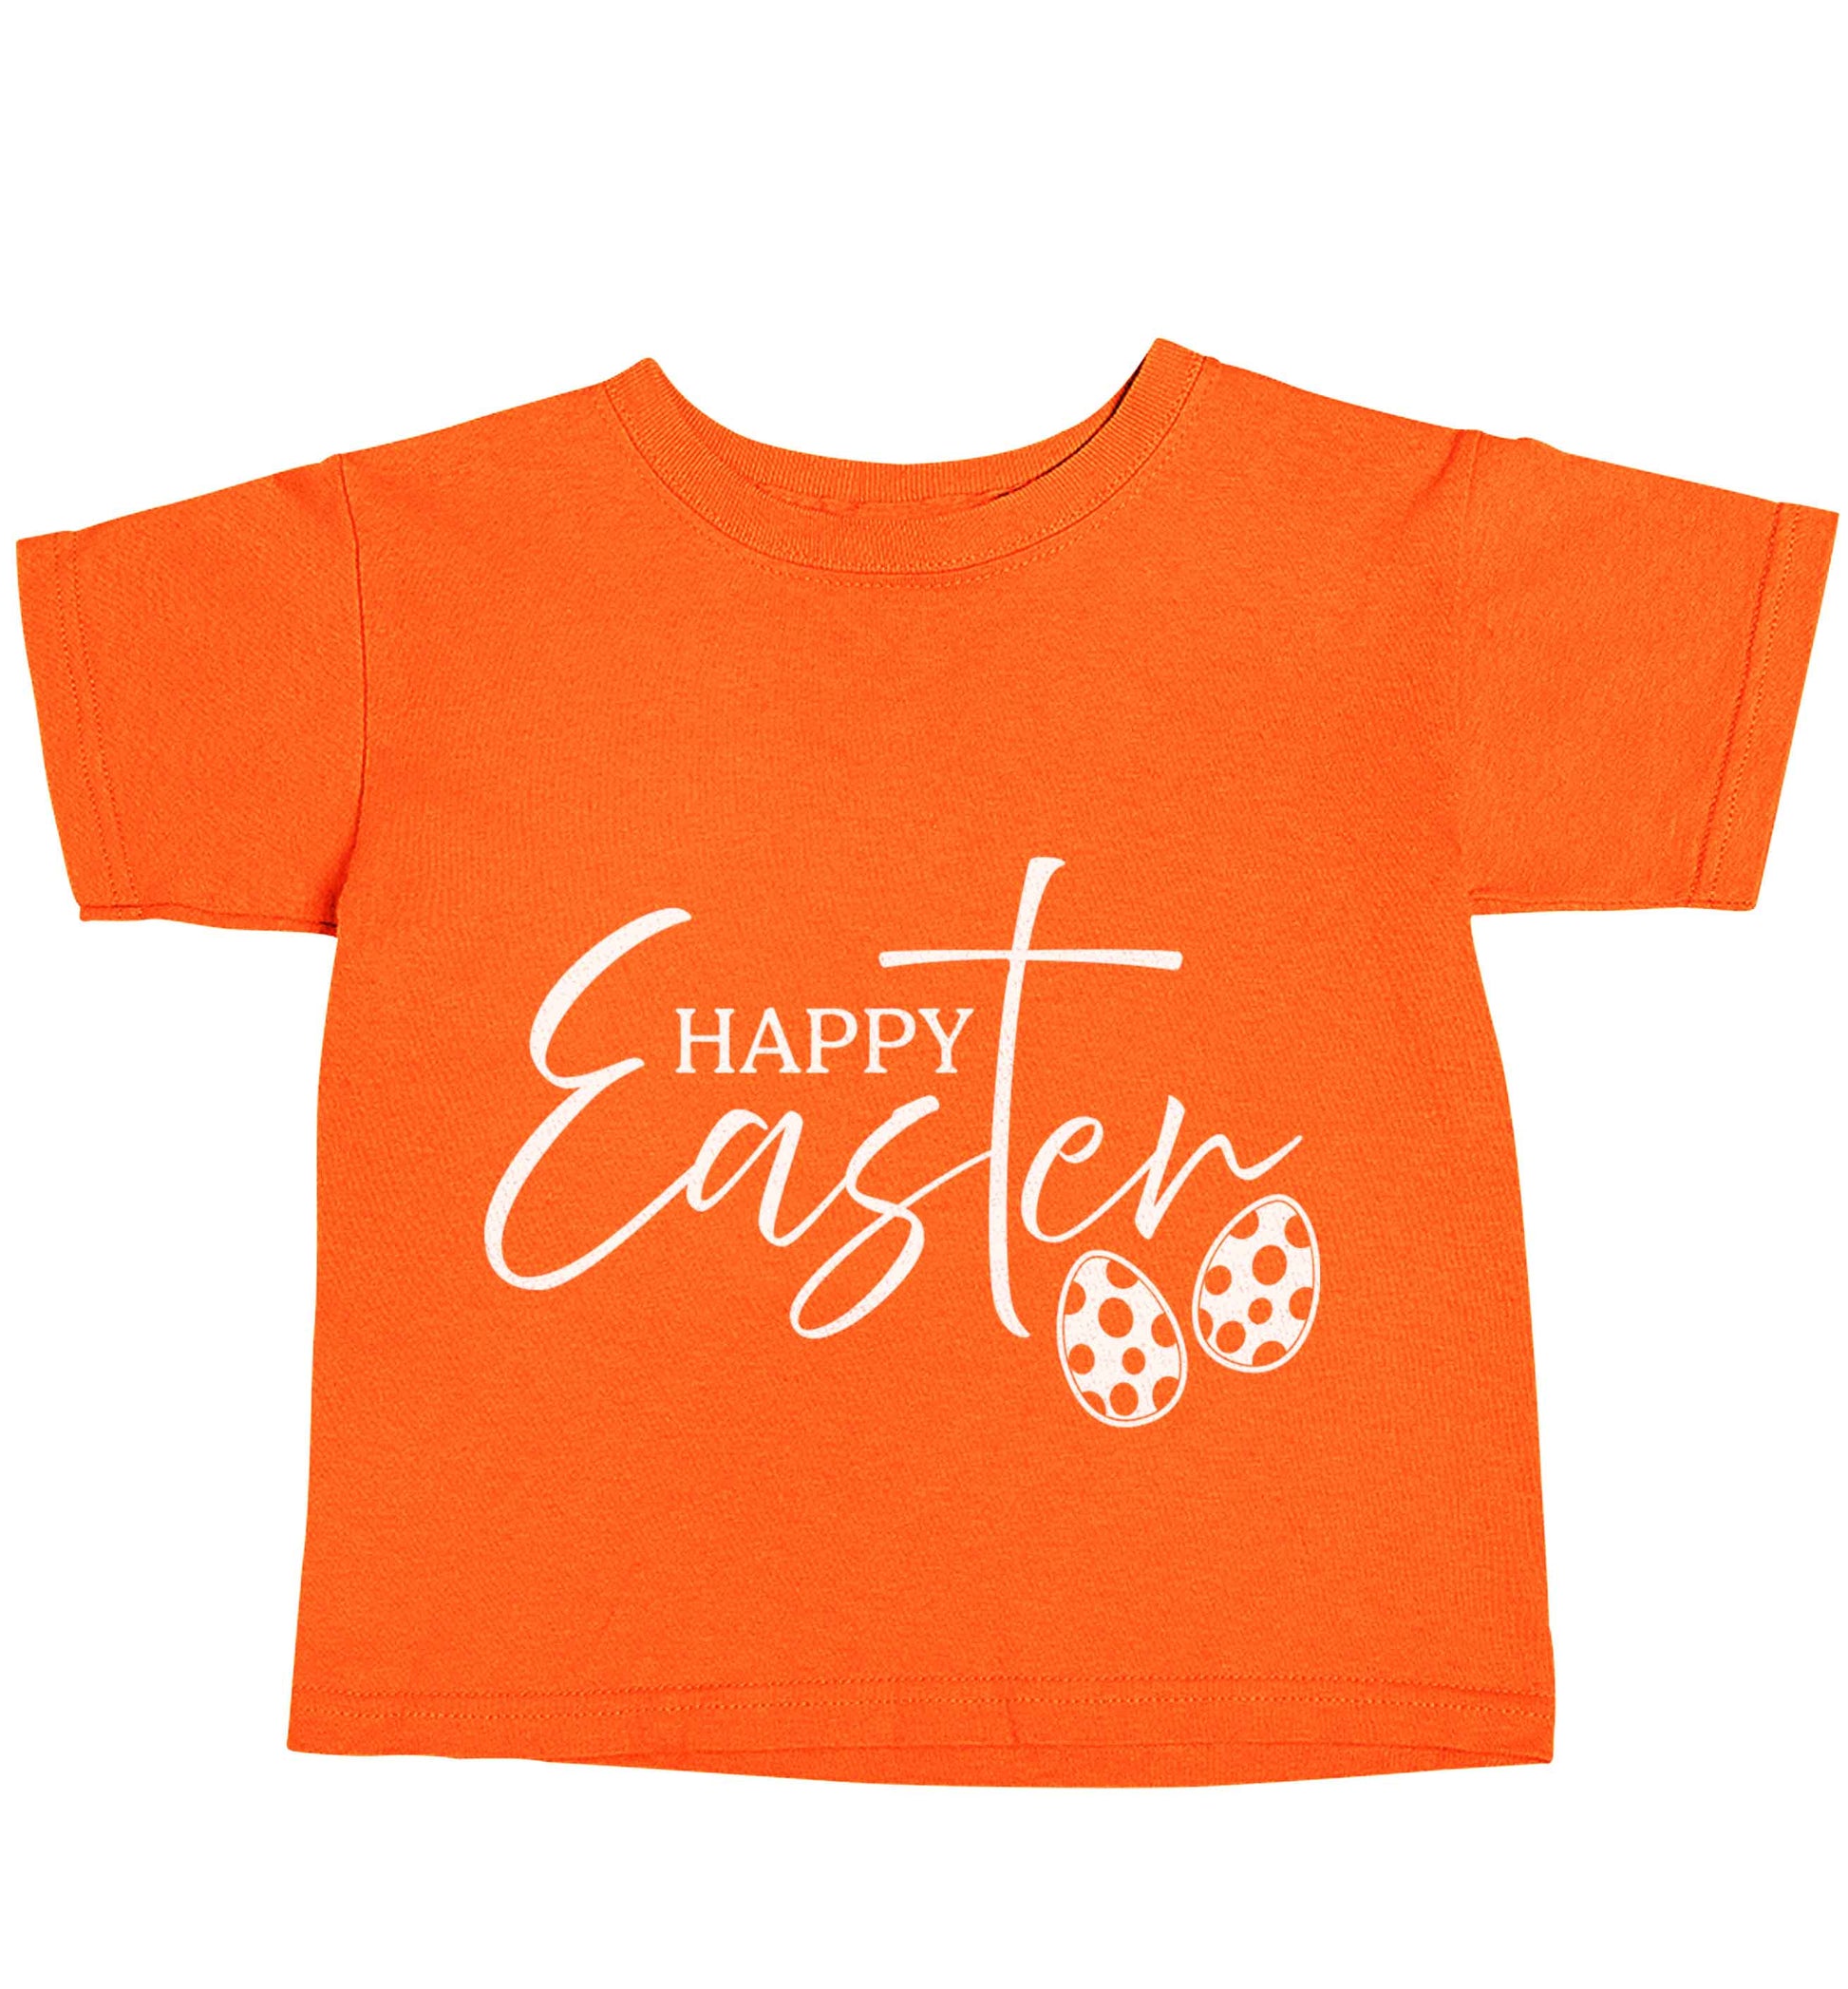 Happy Easter orange baby toddler Tshirt 2 Years